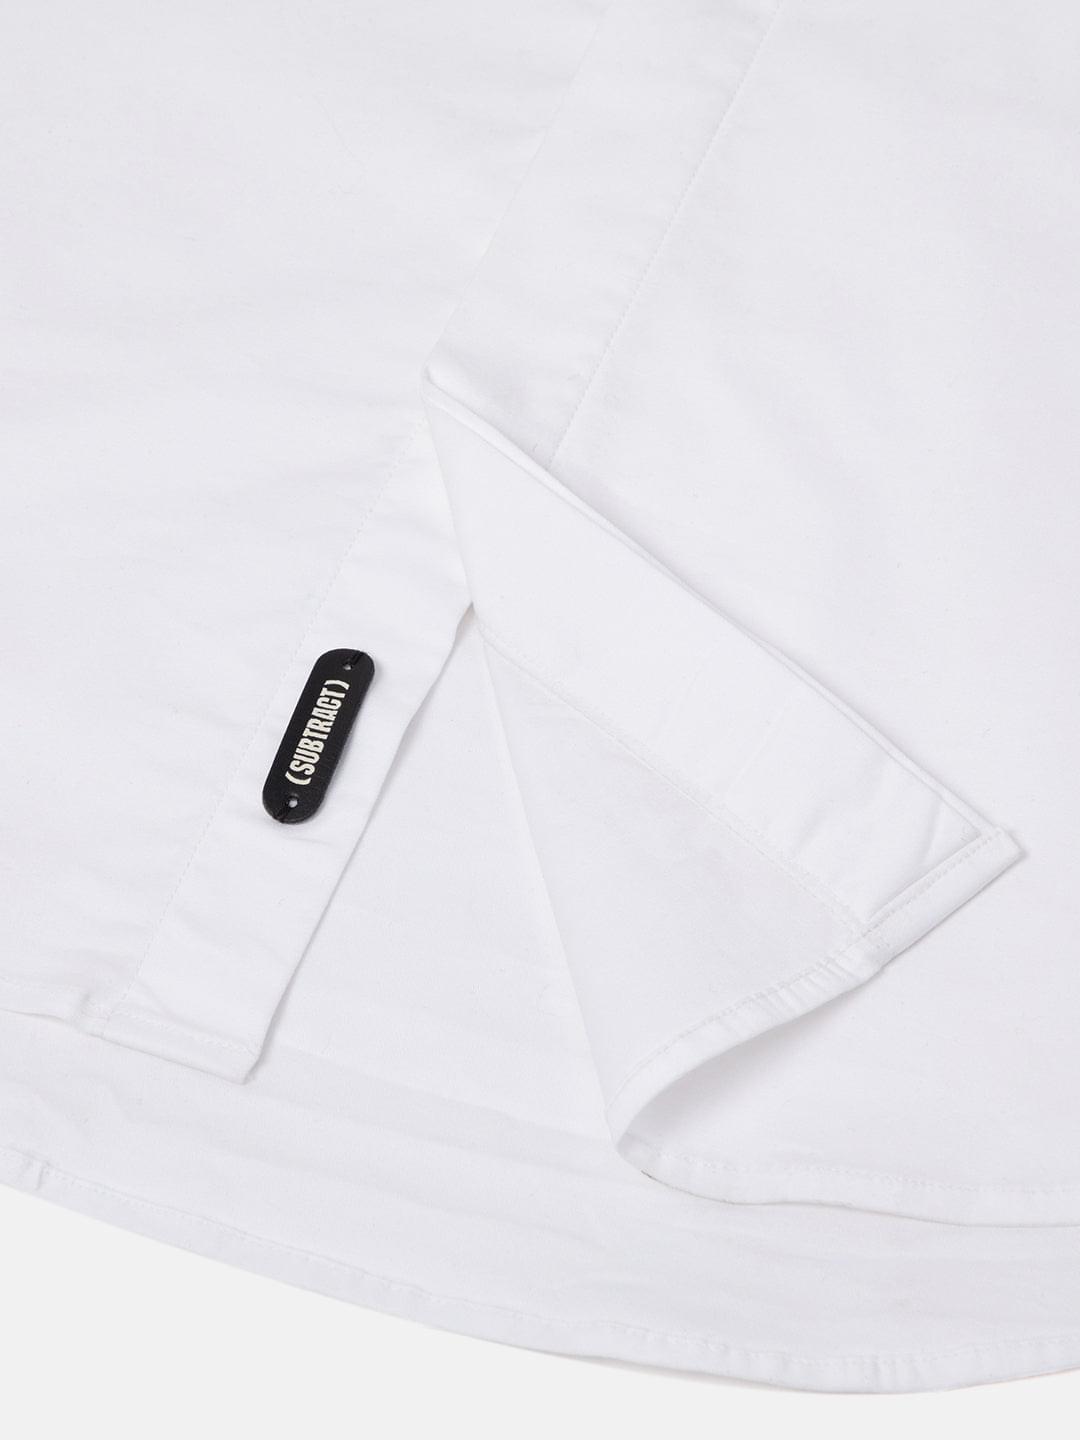 2 Way Stretch Satin Shirt in White- Slim Fit